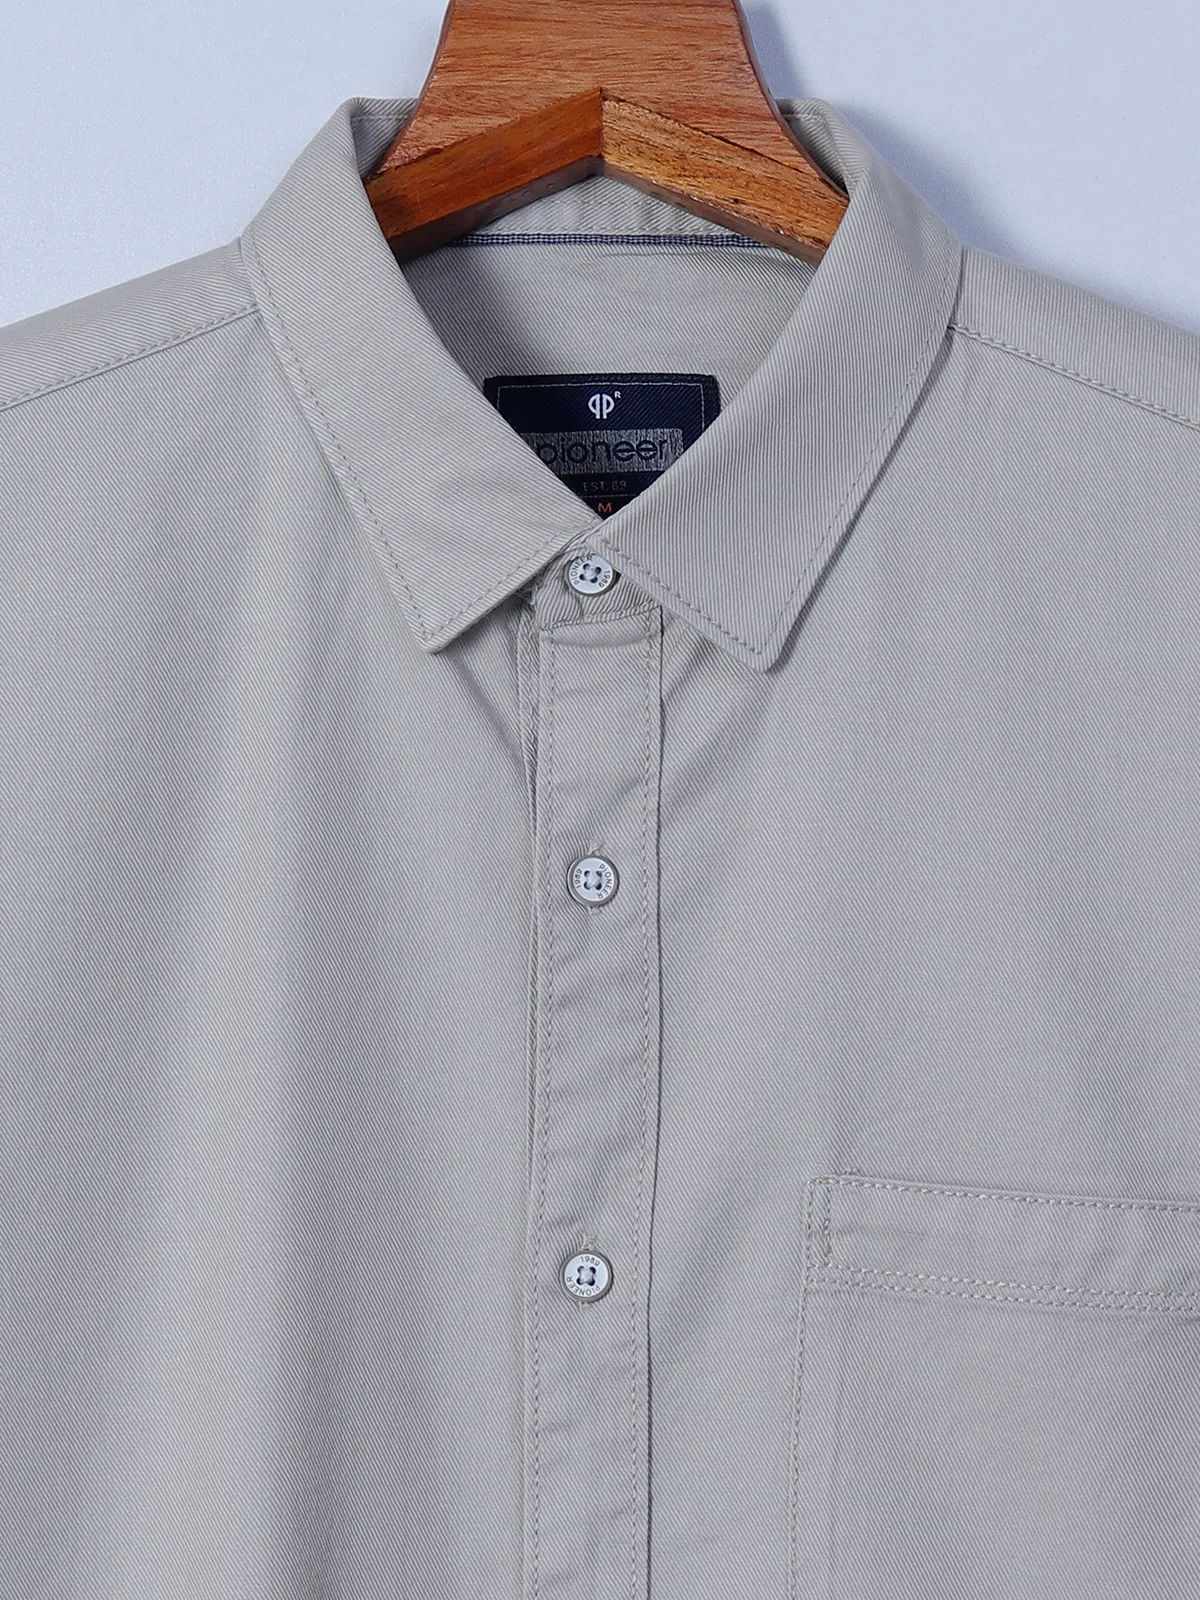 Pioneer beige shirt in plain pattern